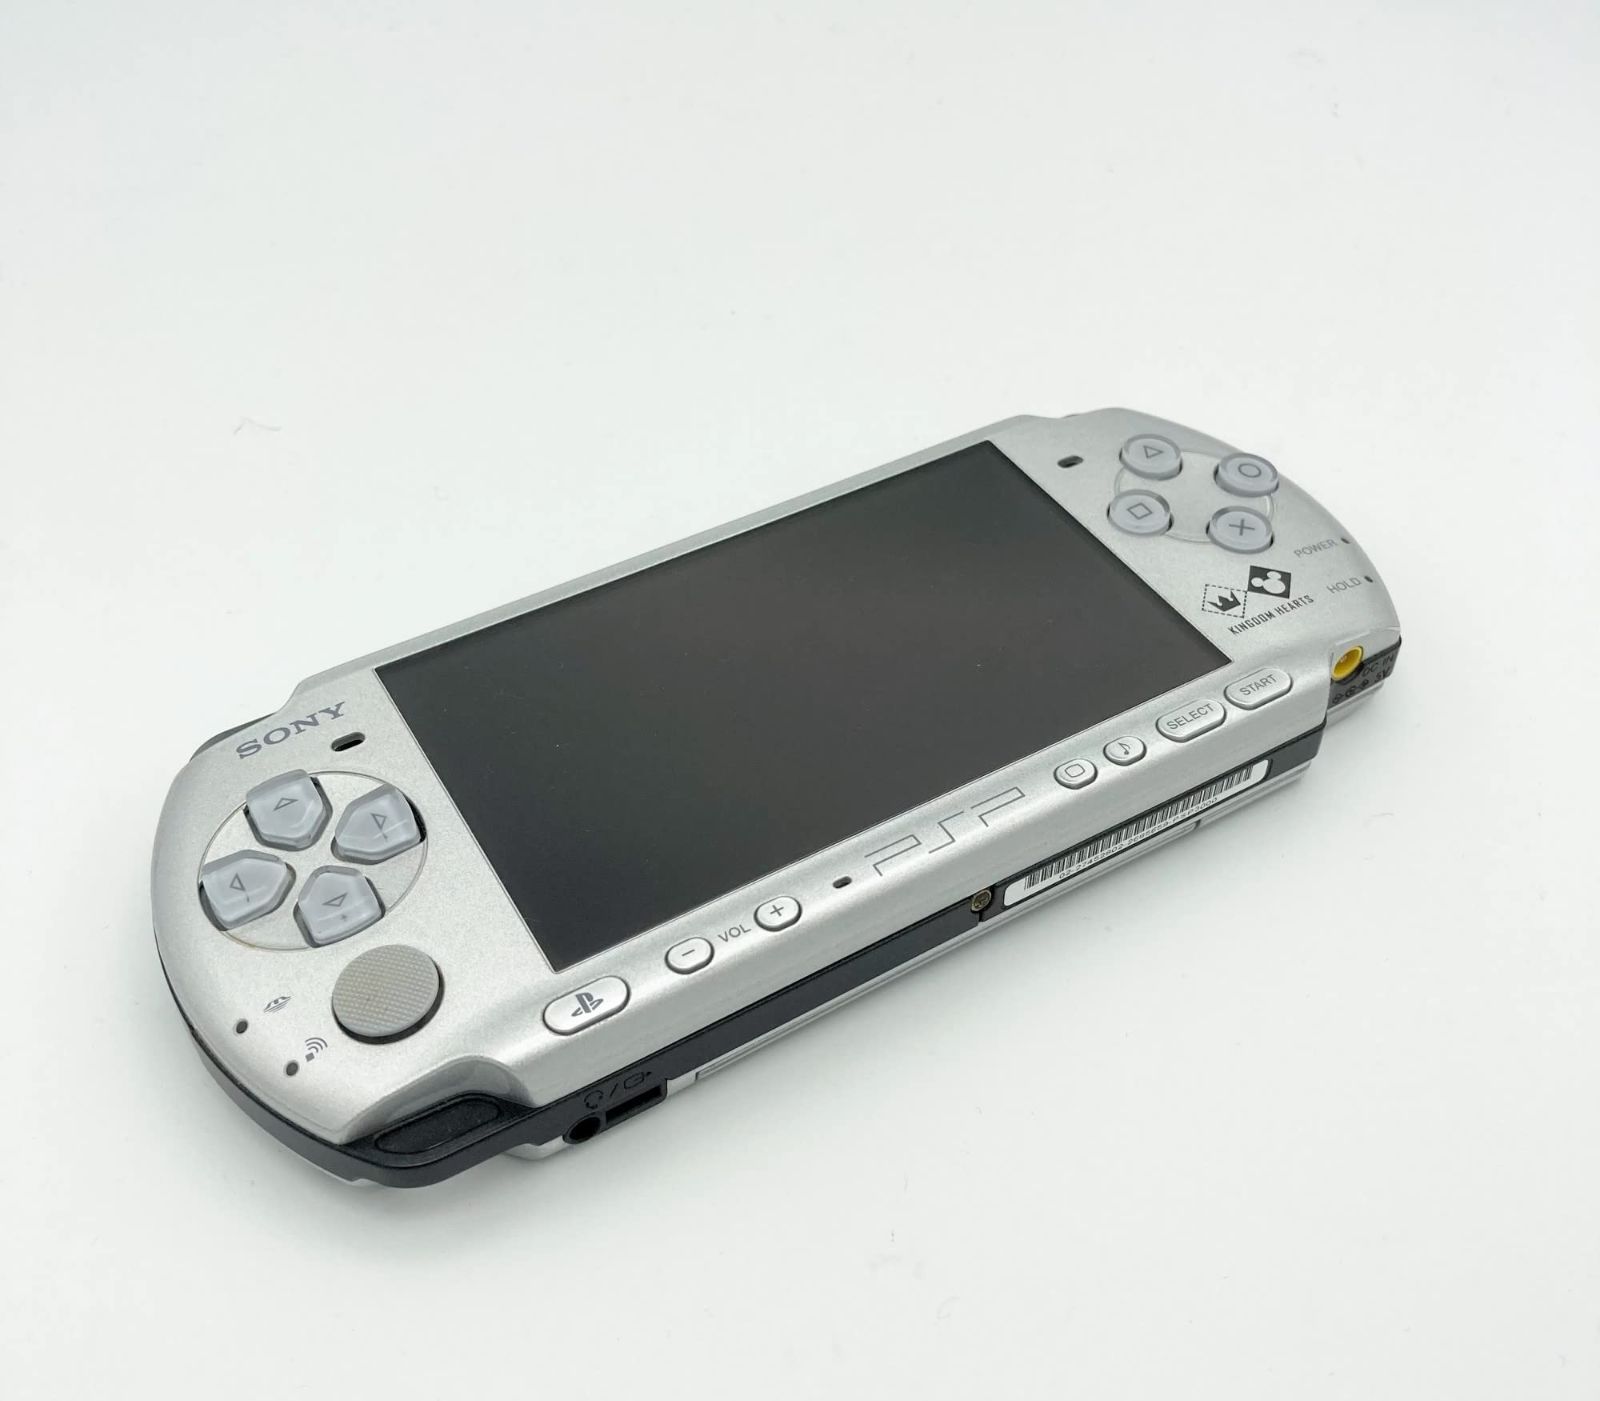 PSPJ-30012 PSP キングダムハーツエディション PSP-3000-